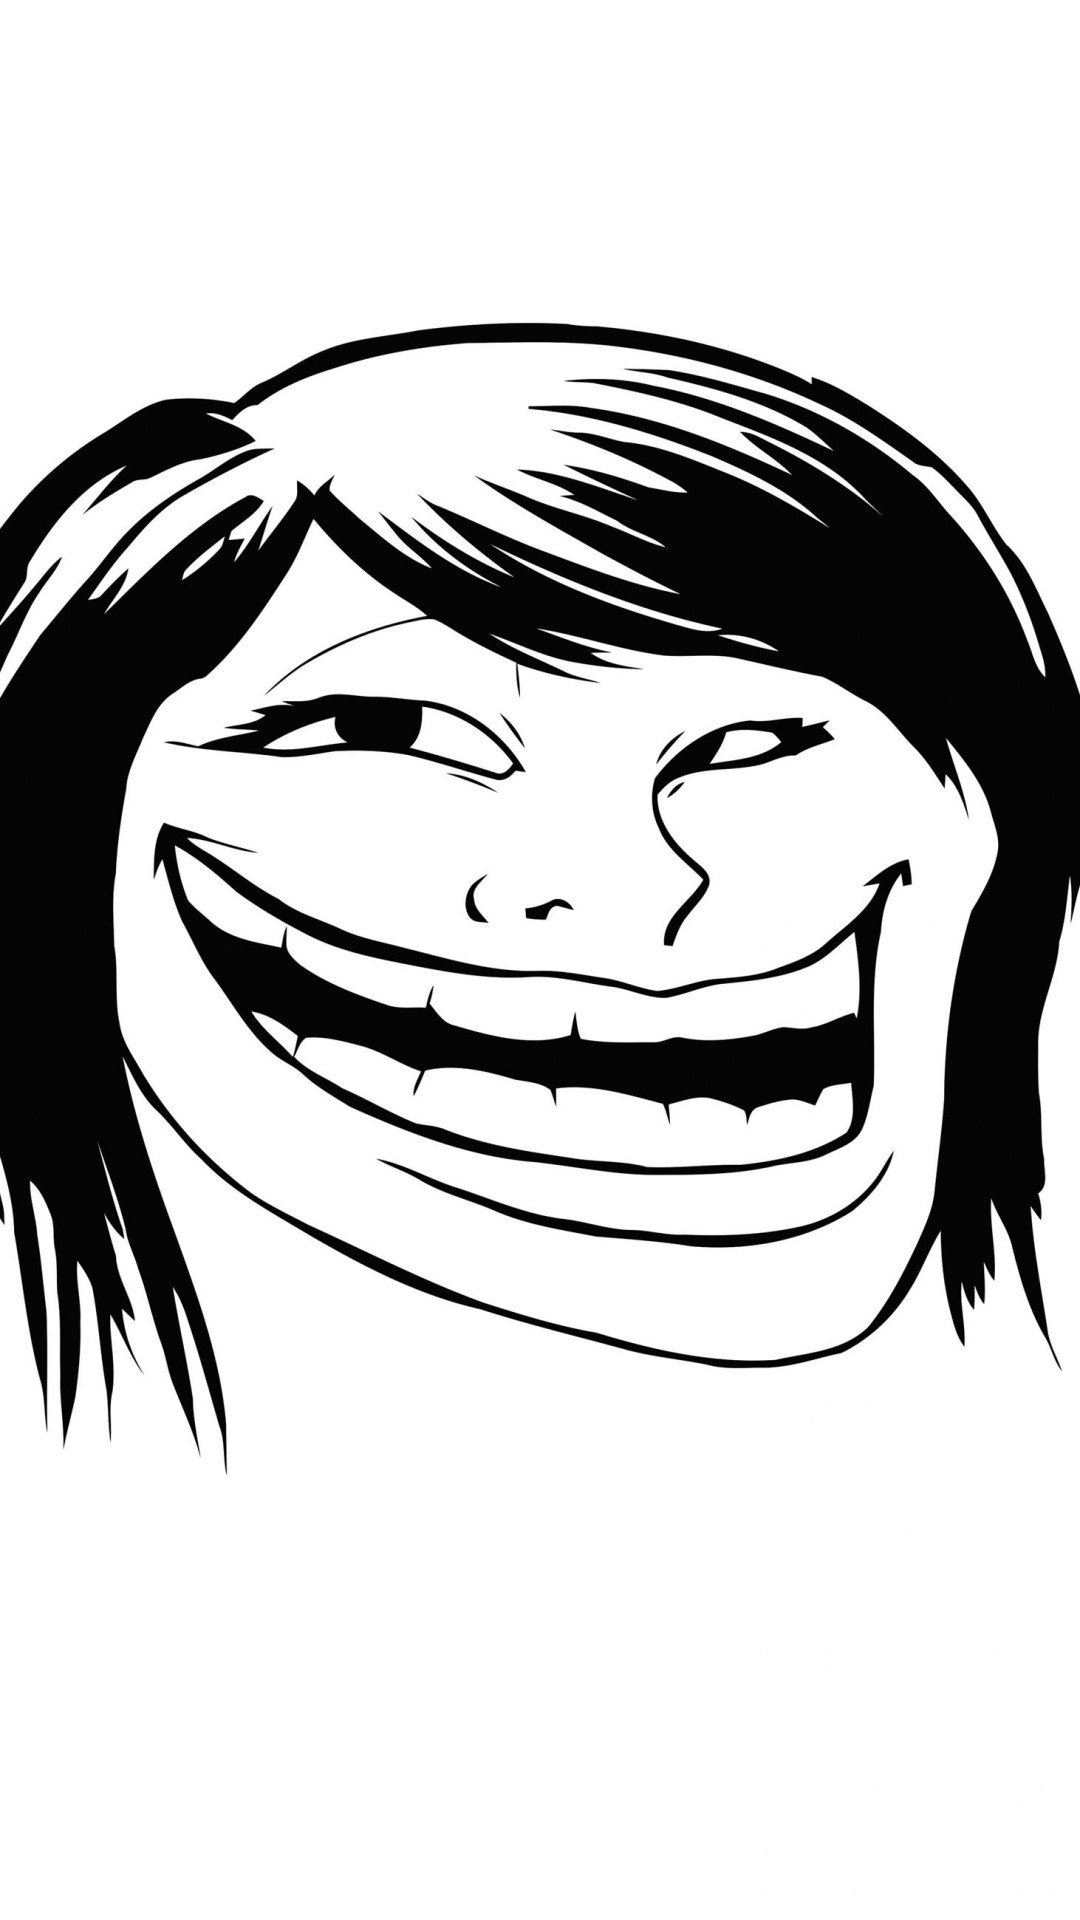 Female Troll Face Meme Wallpaper for SONY Xperia Z2